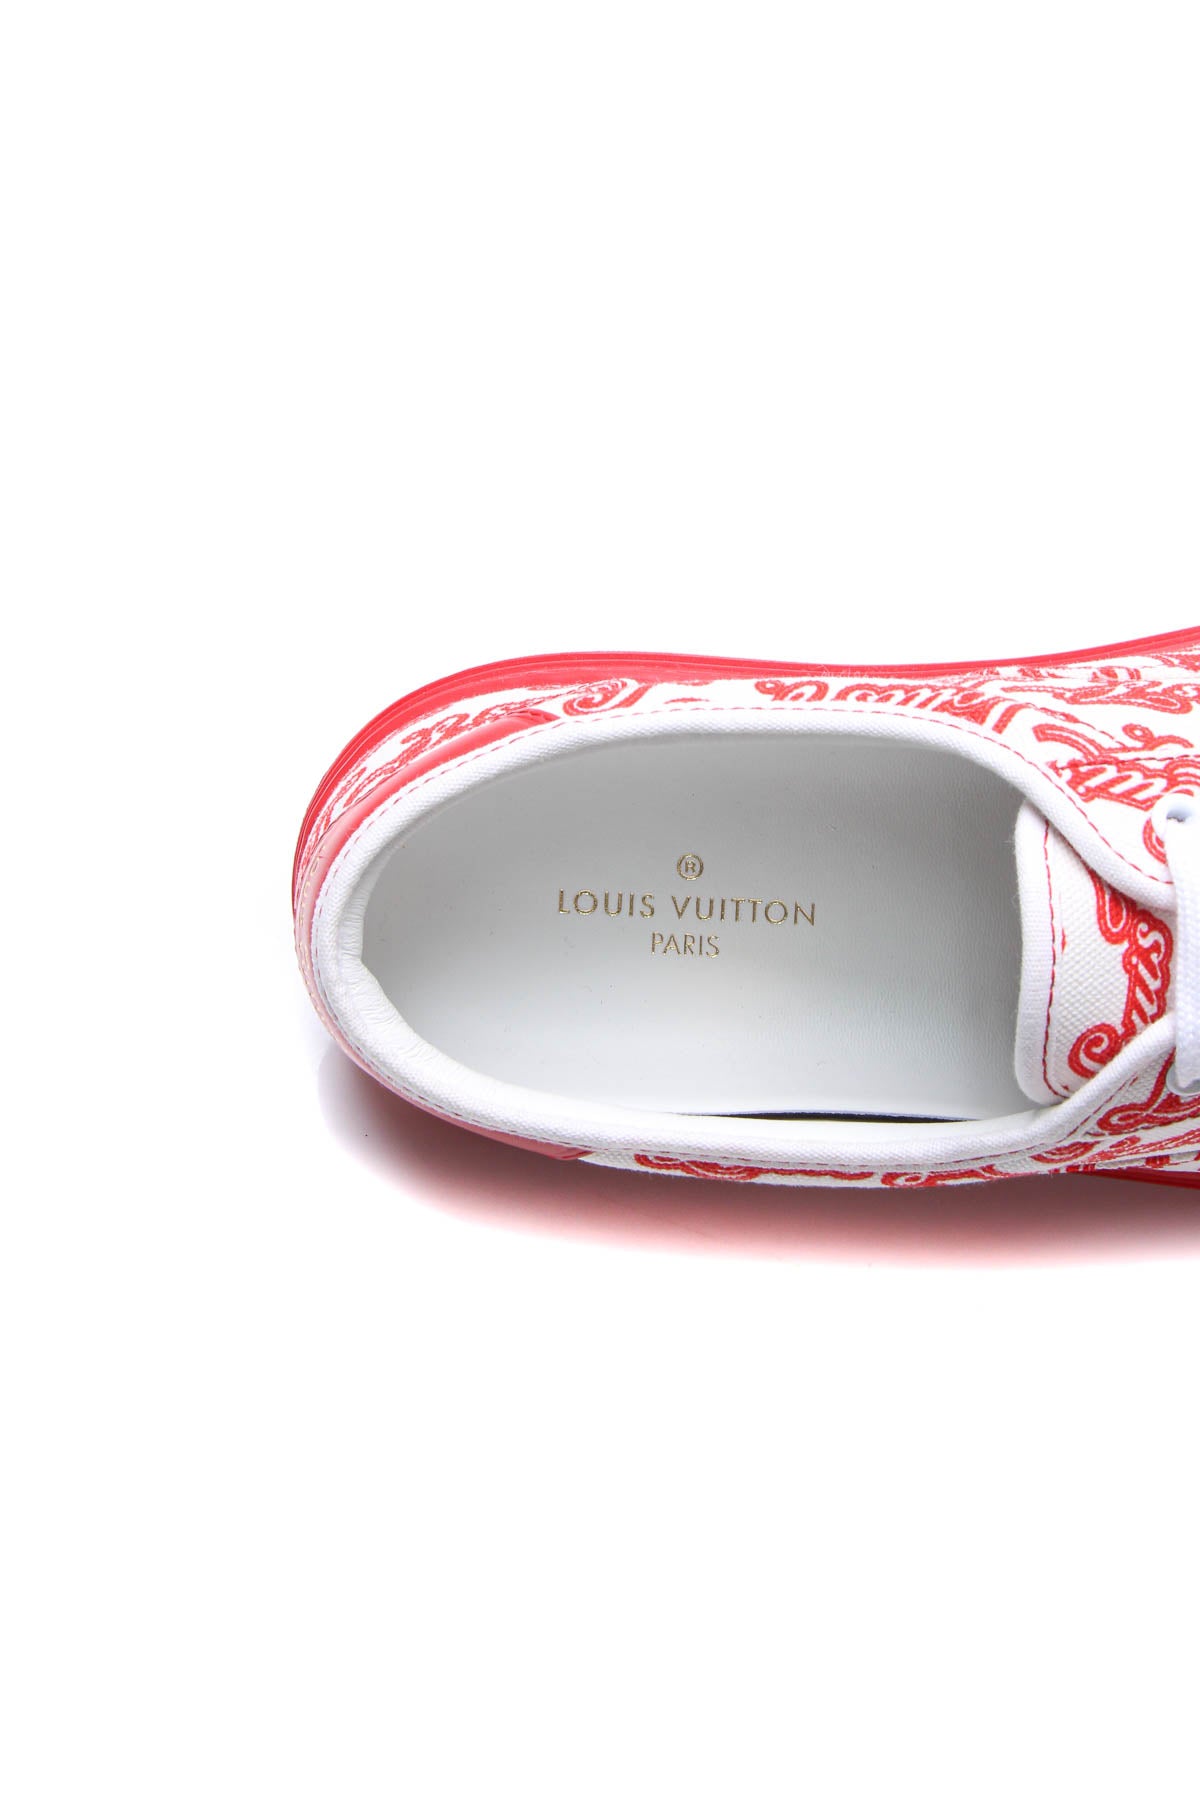 Louis Vuitton, Shoes, Louis Vuitton Pink High Top Sneakers